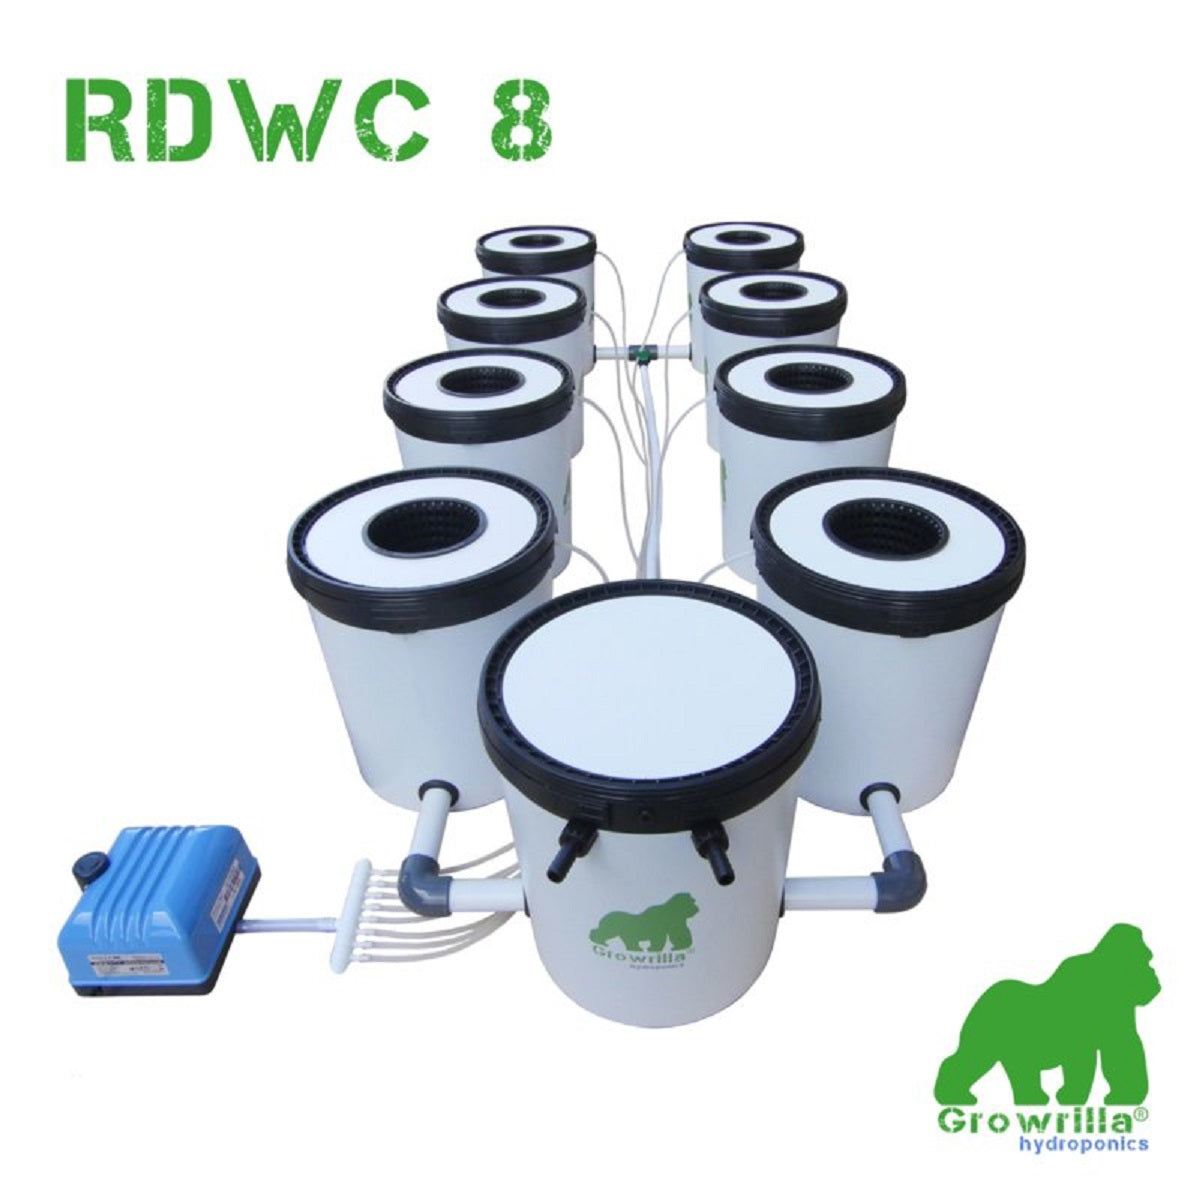 Système de culture hydroponique Growrilla RDWC 8